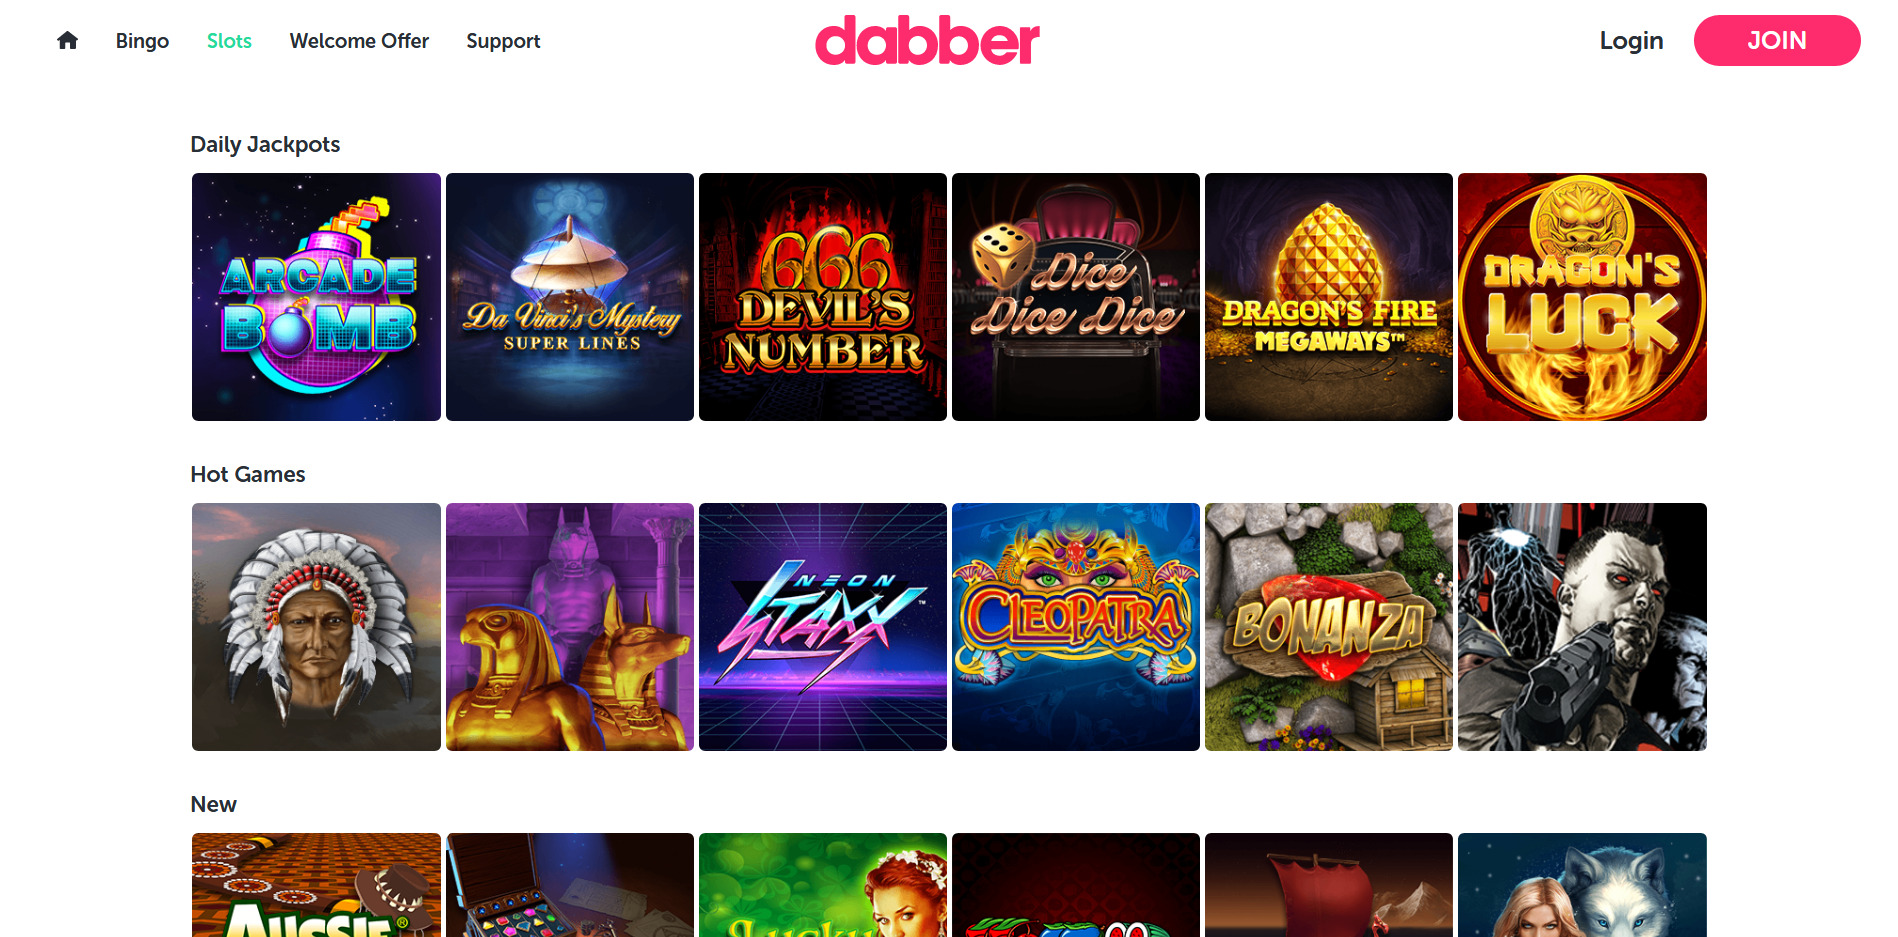 Dabber Bingo Casino Games